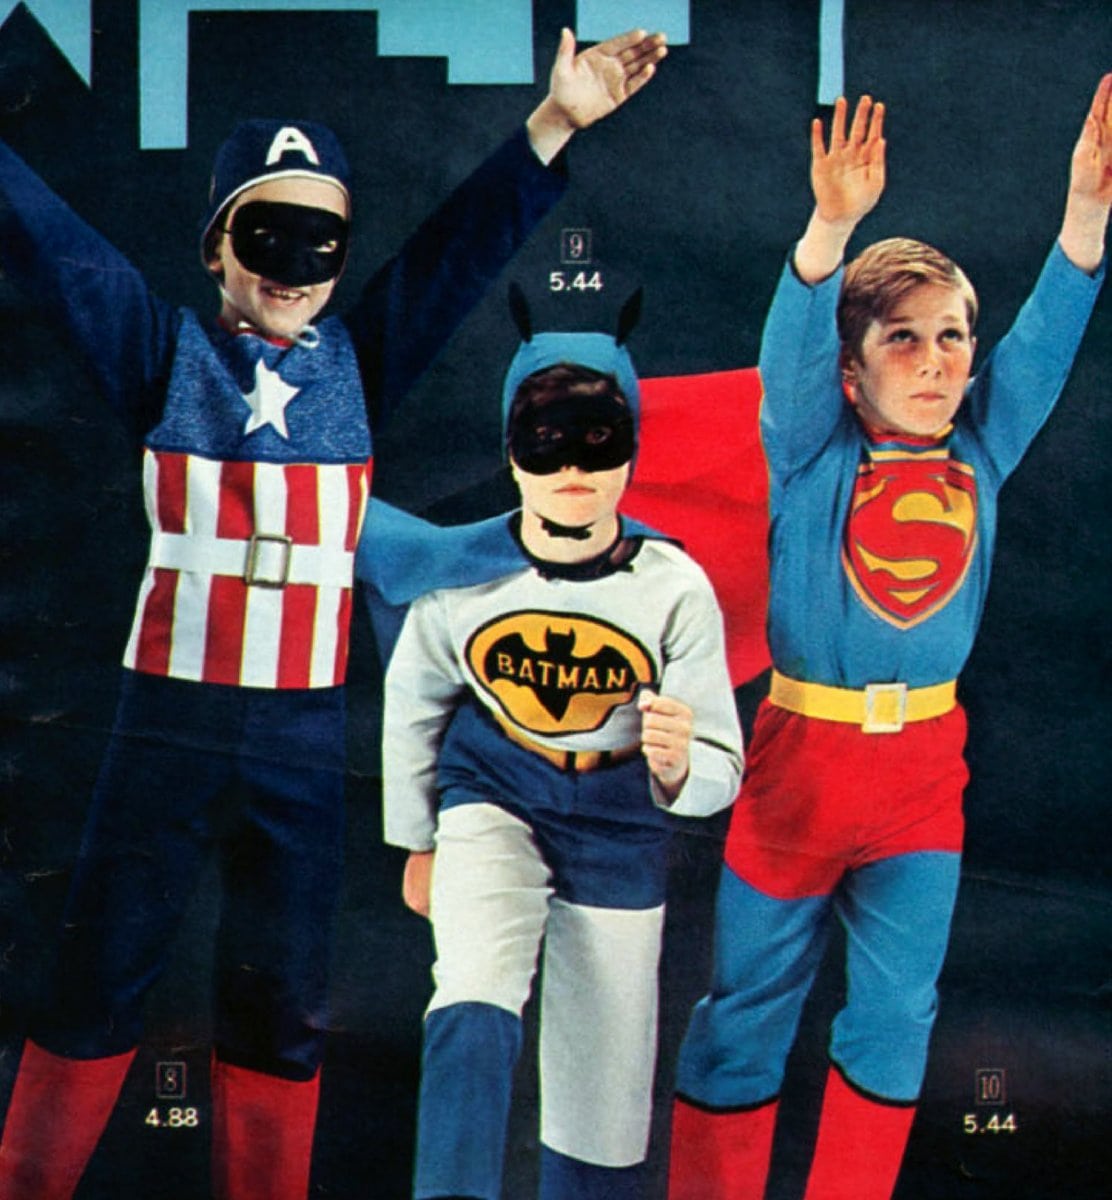 Vintage Halloween costumes - Superman and Batman